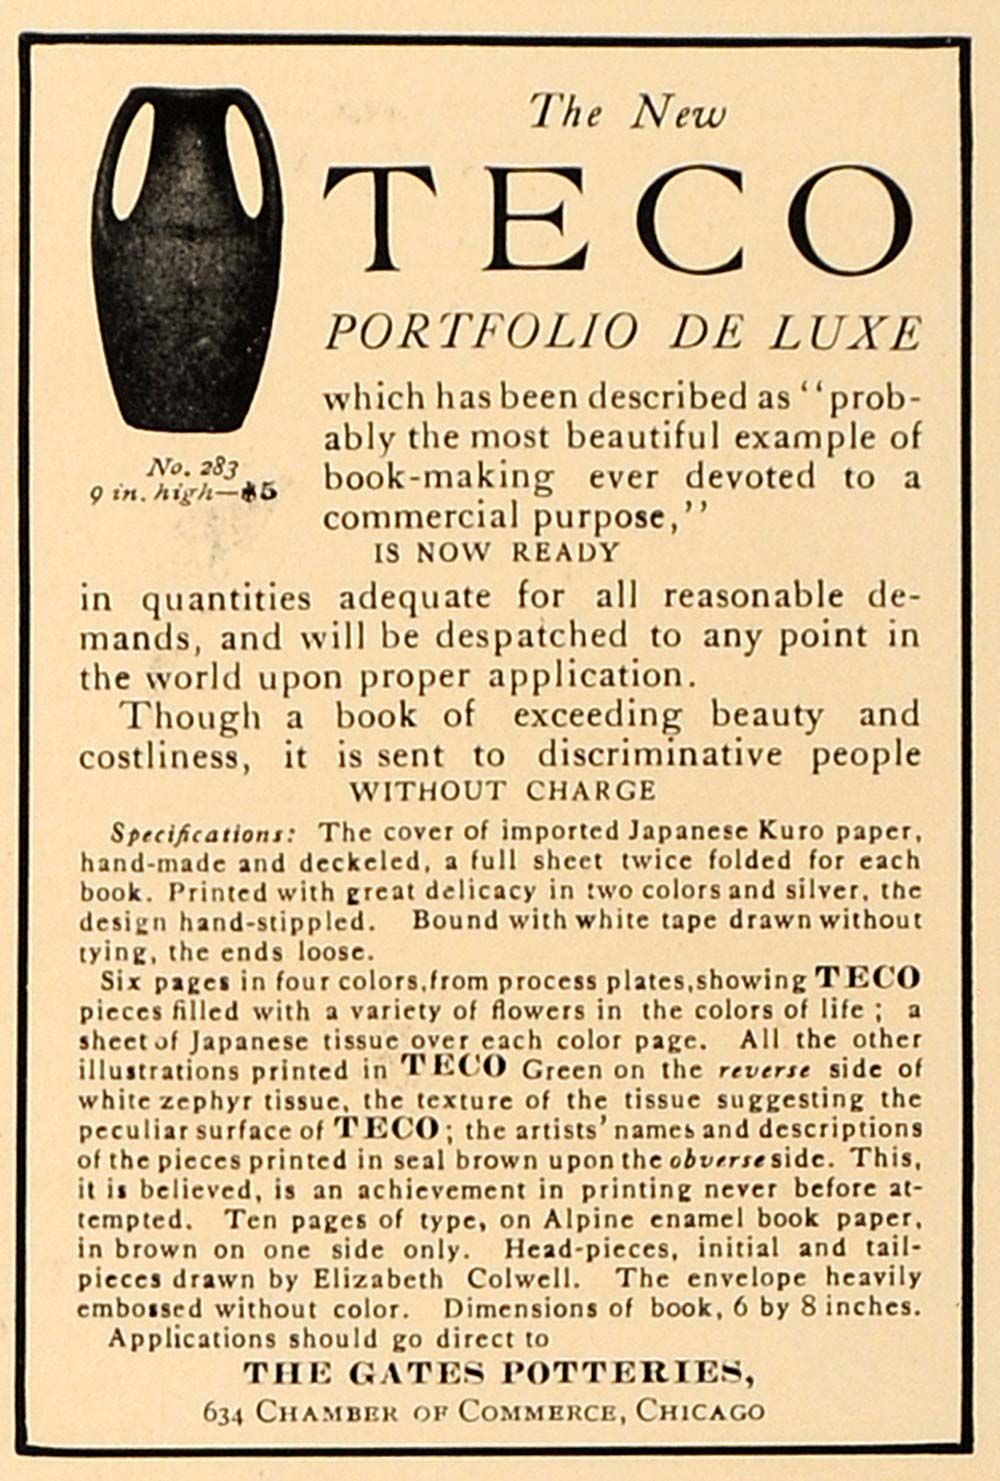 1907 Ad Gates Potteries Teco Porfolio De Luxe Chicago - ORIGINAL ADVERTISING CL4